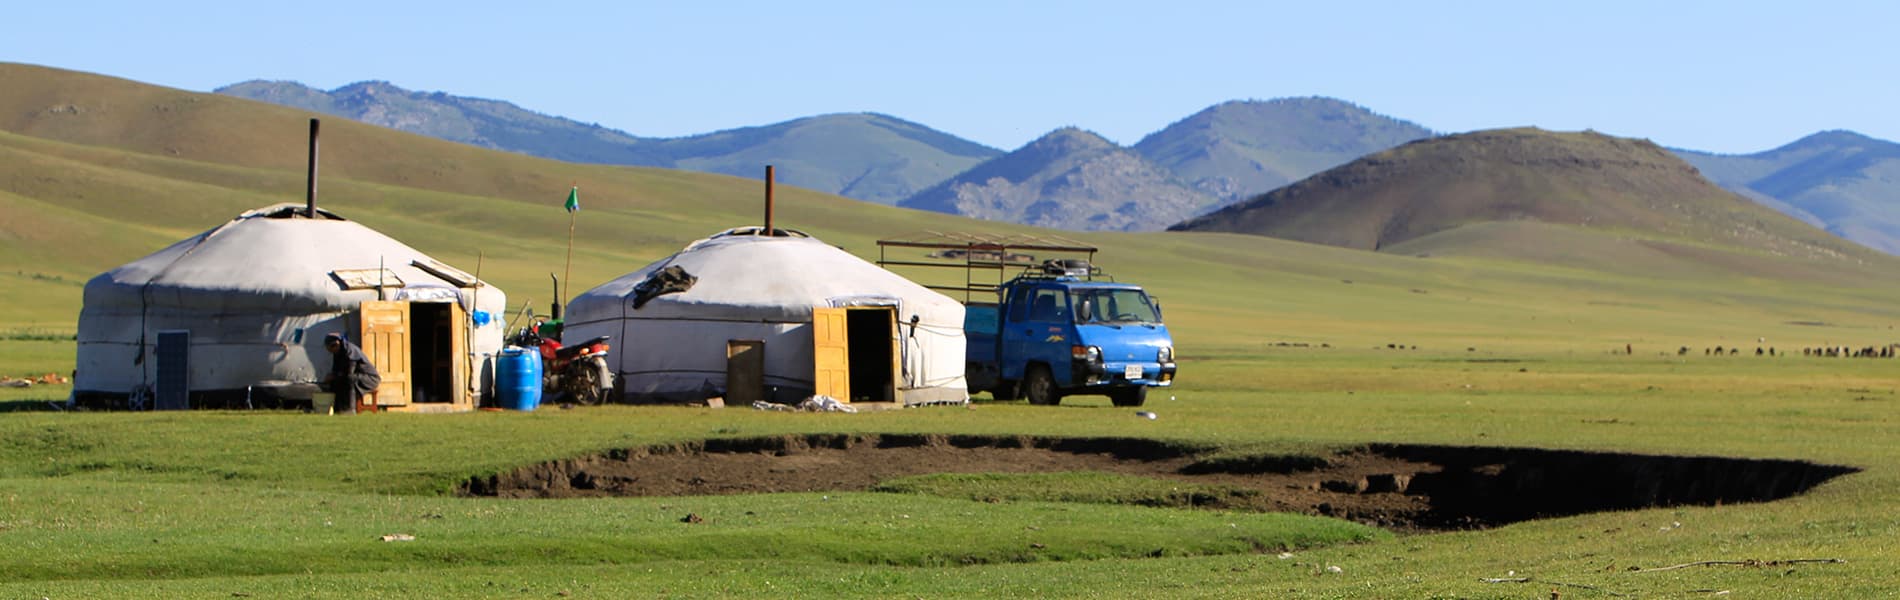 Danshig Naadam & Along the Exotic Route of Mongolia